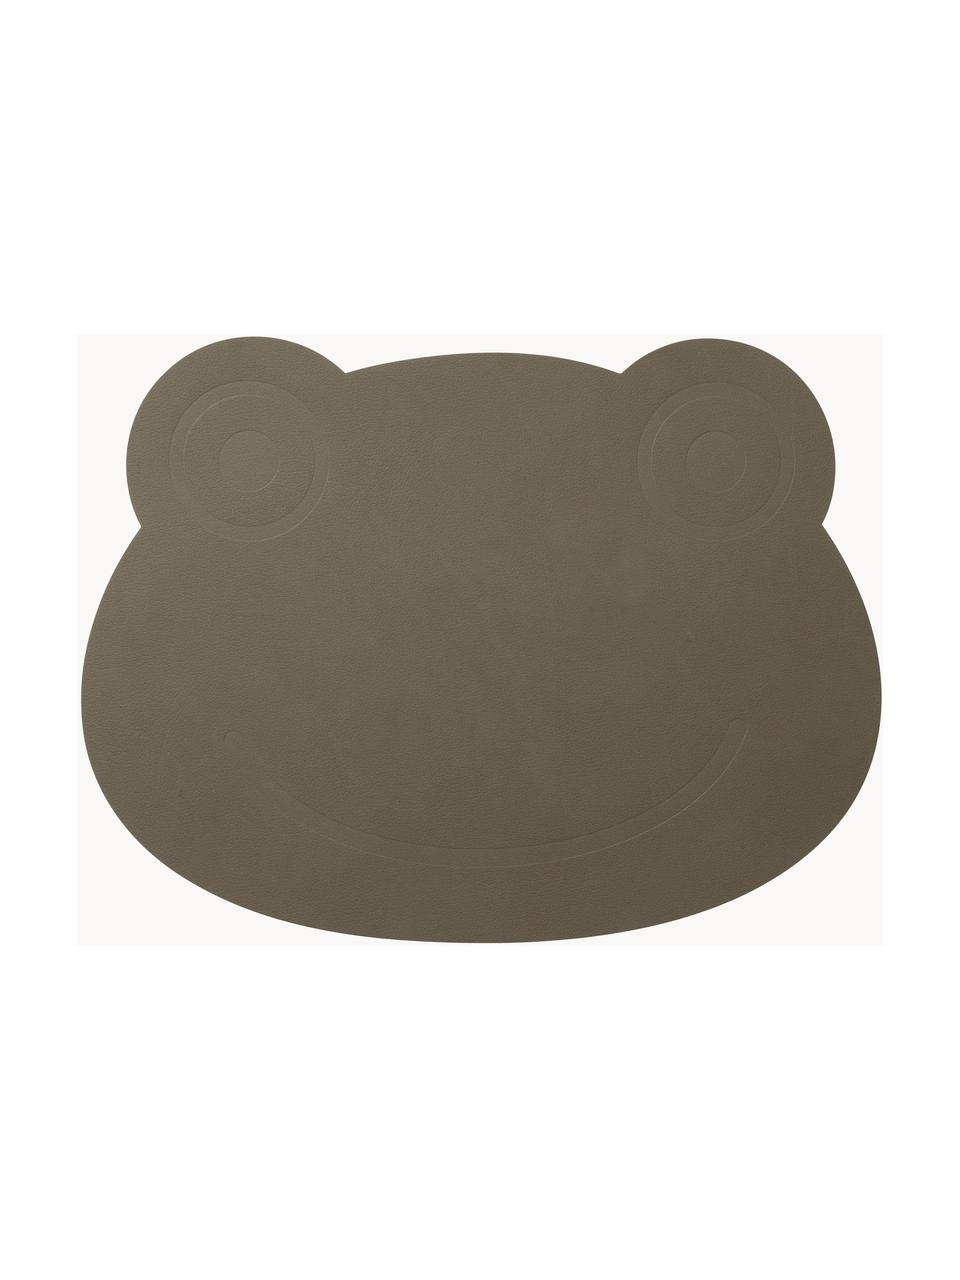 Leder-Tischset Frog, Leder, Gummi, Graugrün, B 38 x L 28 cm